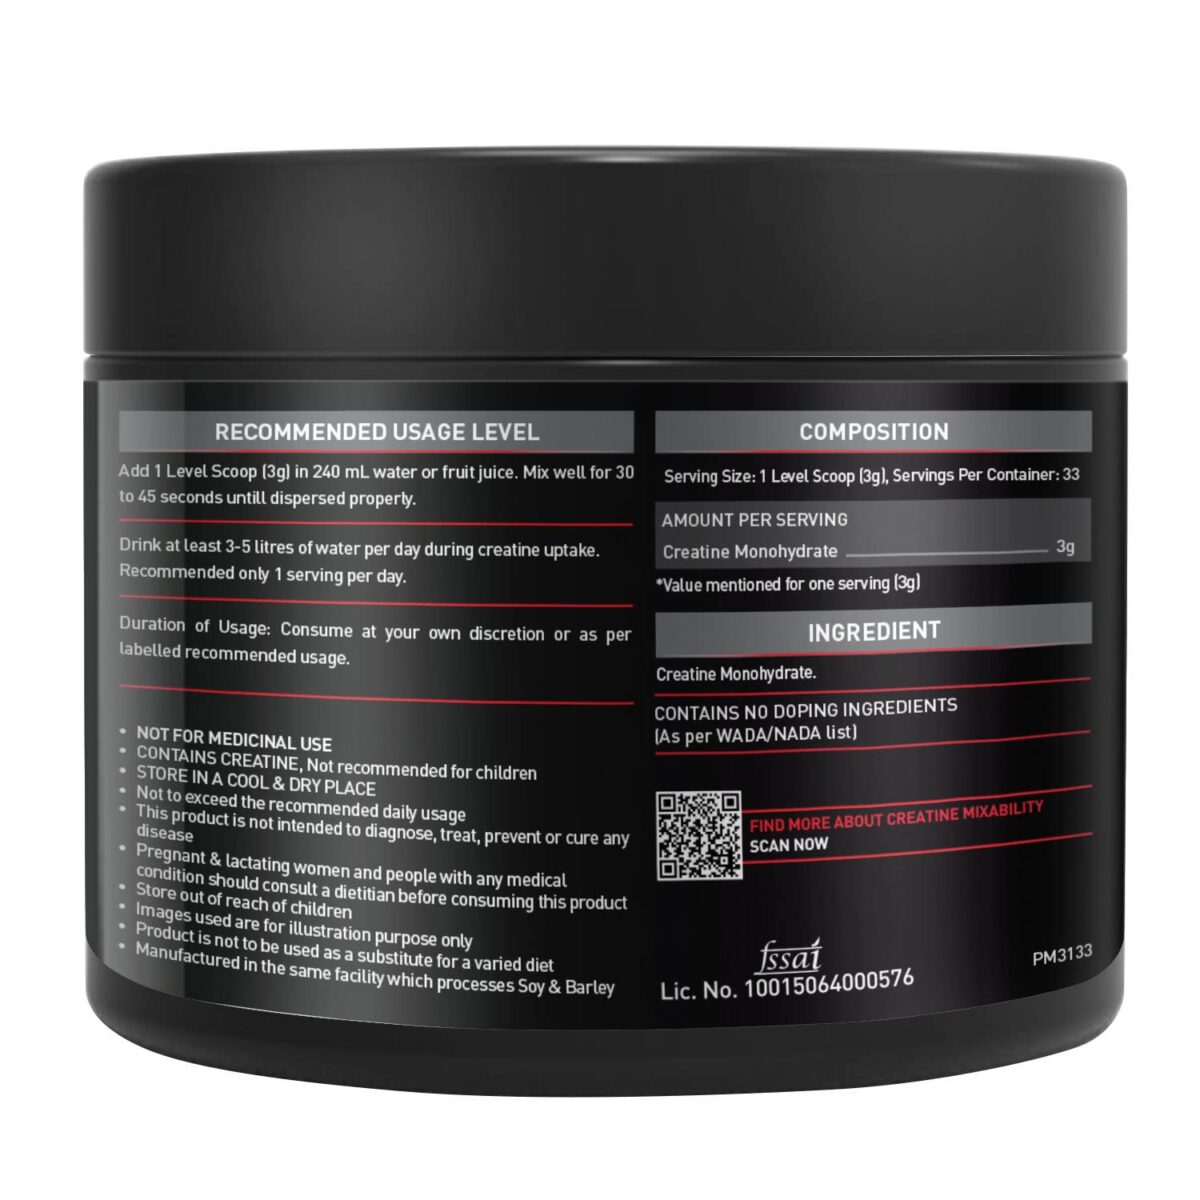 MuscleBlaze Creatine Monohydrate - Unflavoured, 250 gm